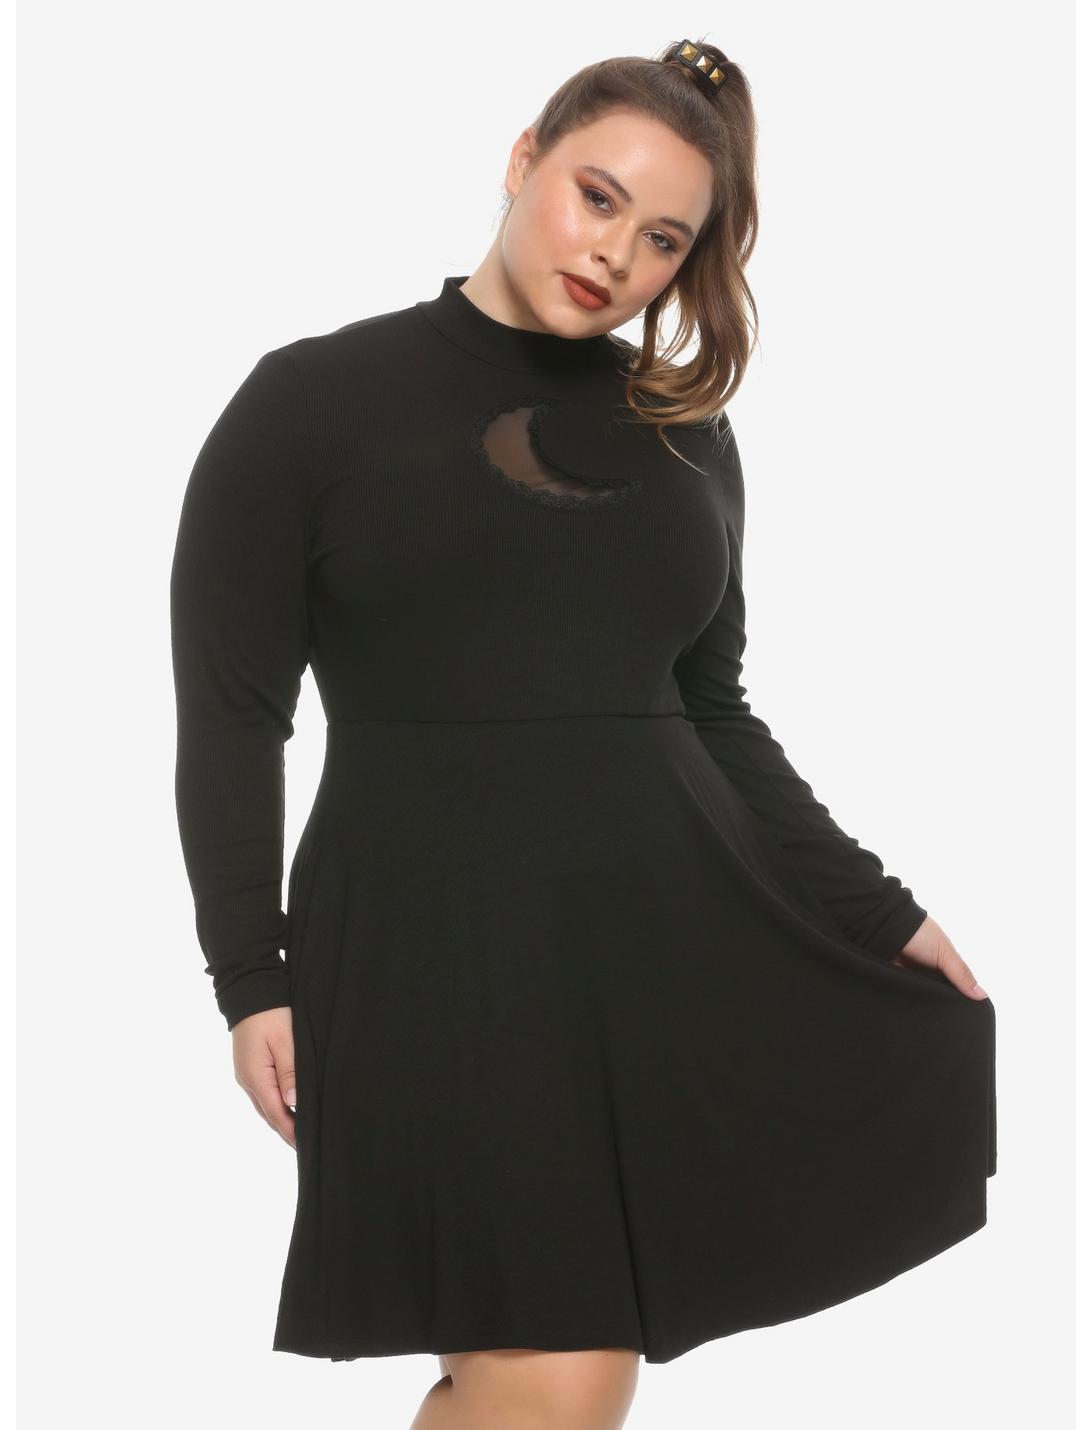 Moon Cutout Mock Neck Long-Sleeve Dress Plus Size, BLACK, hi-res